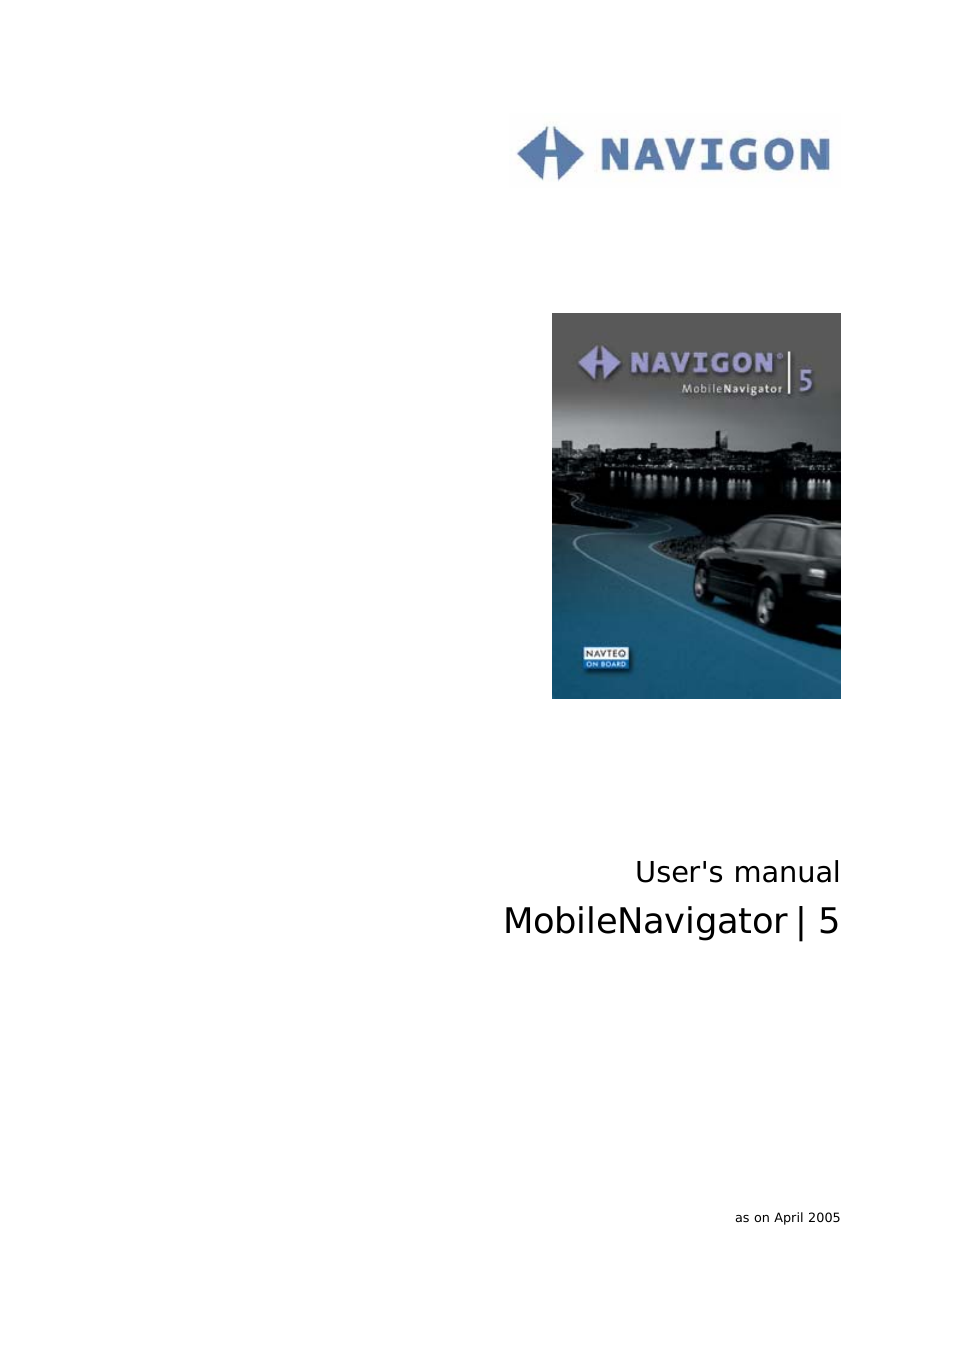 MobileNavigator 5